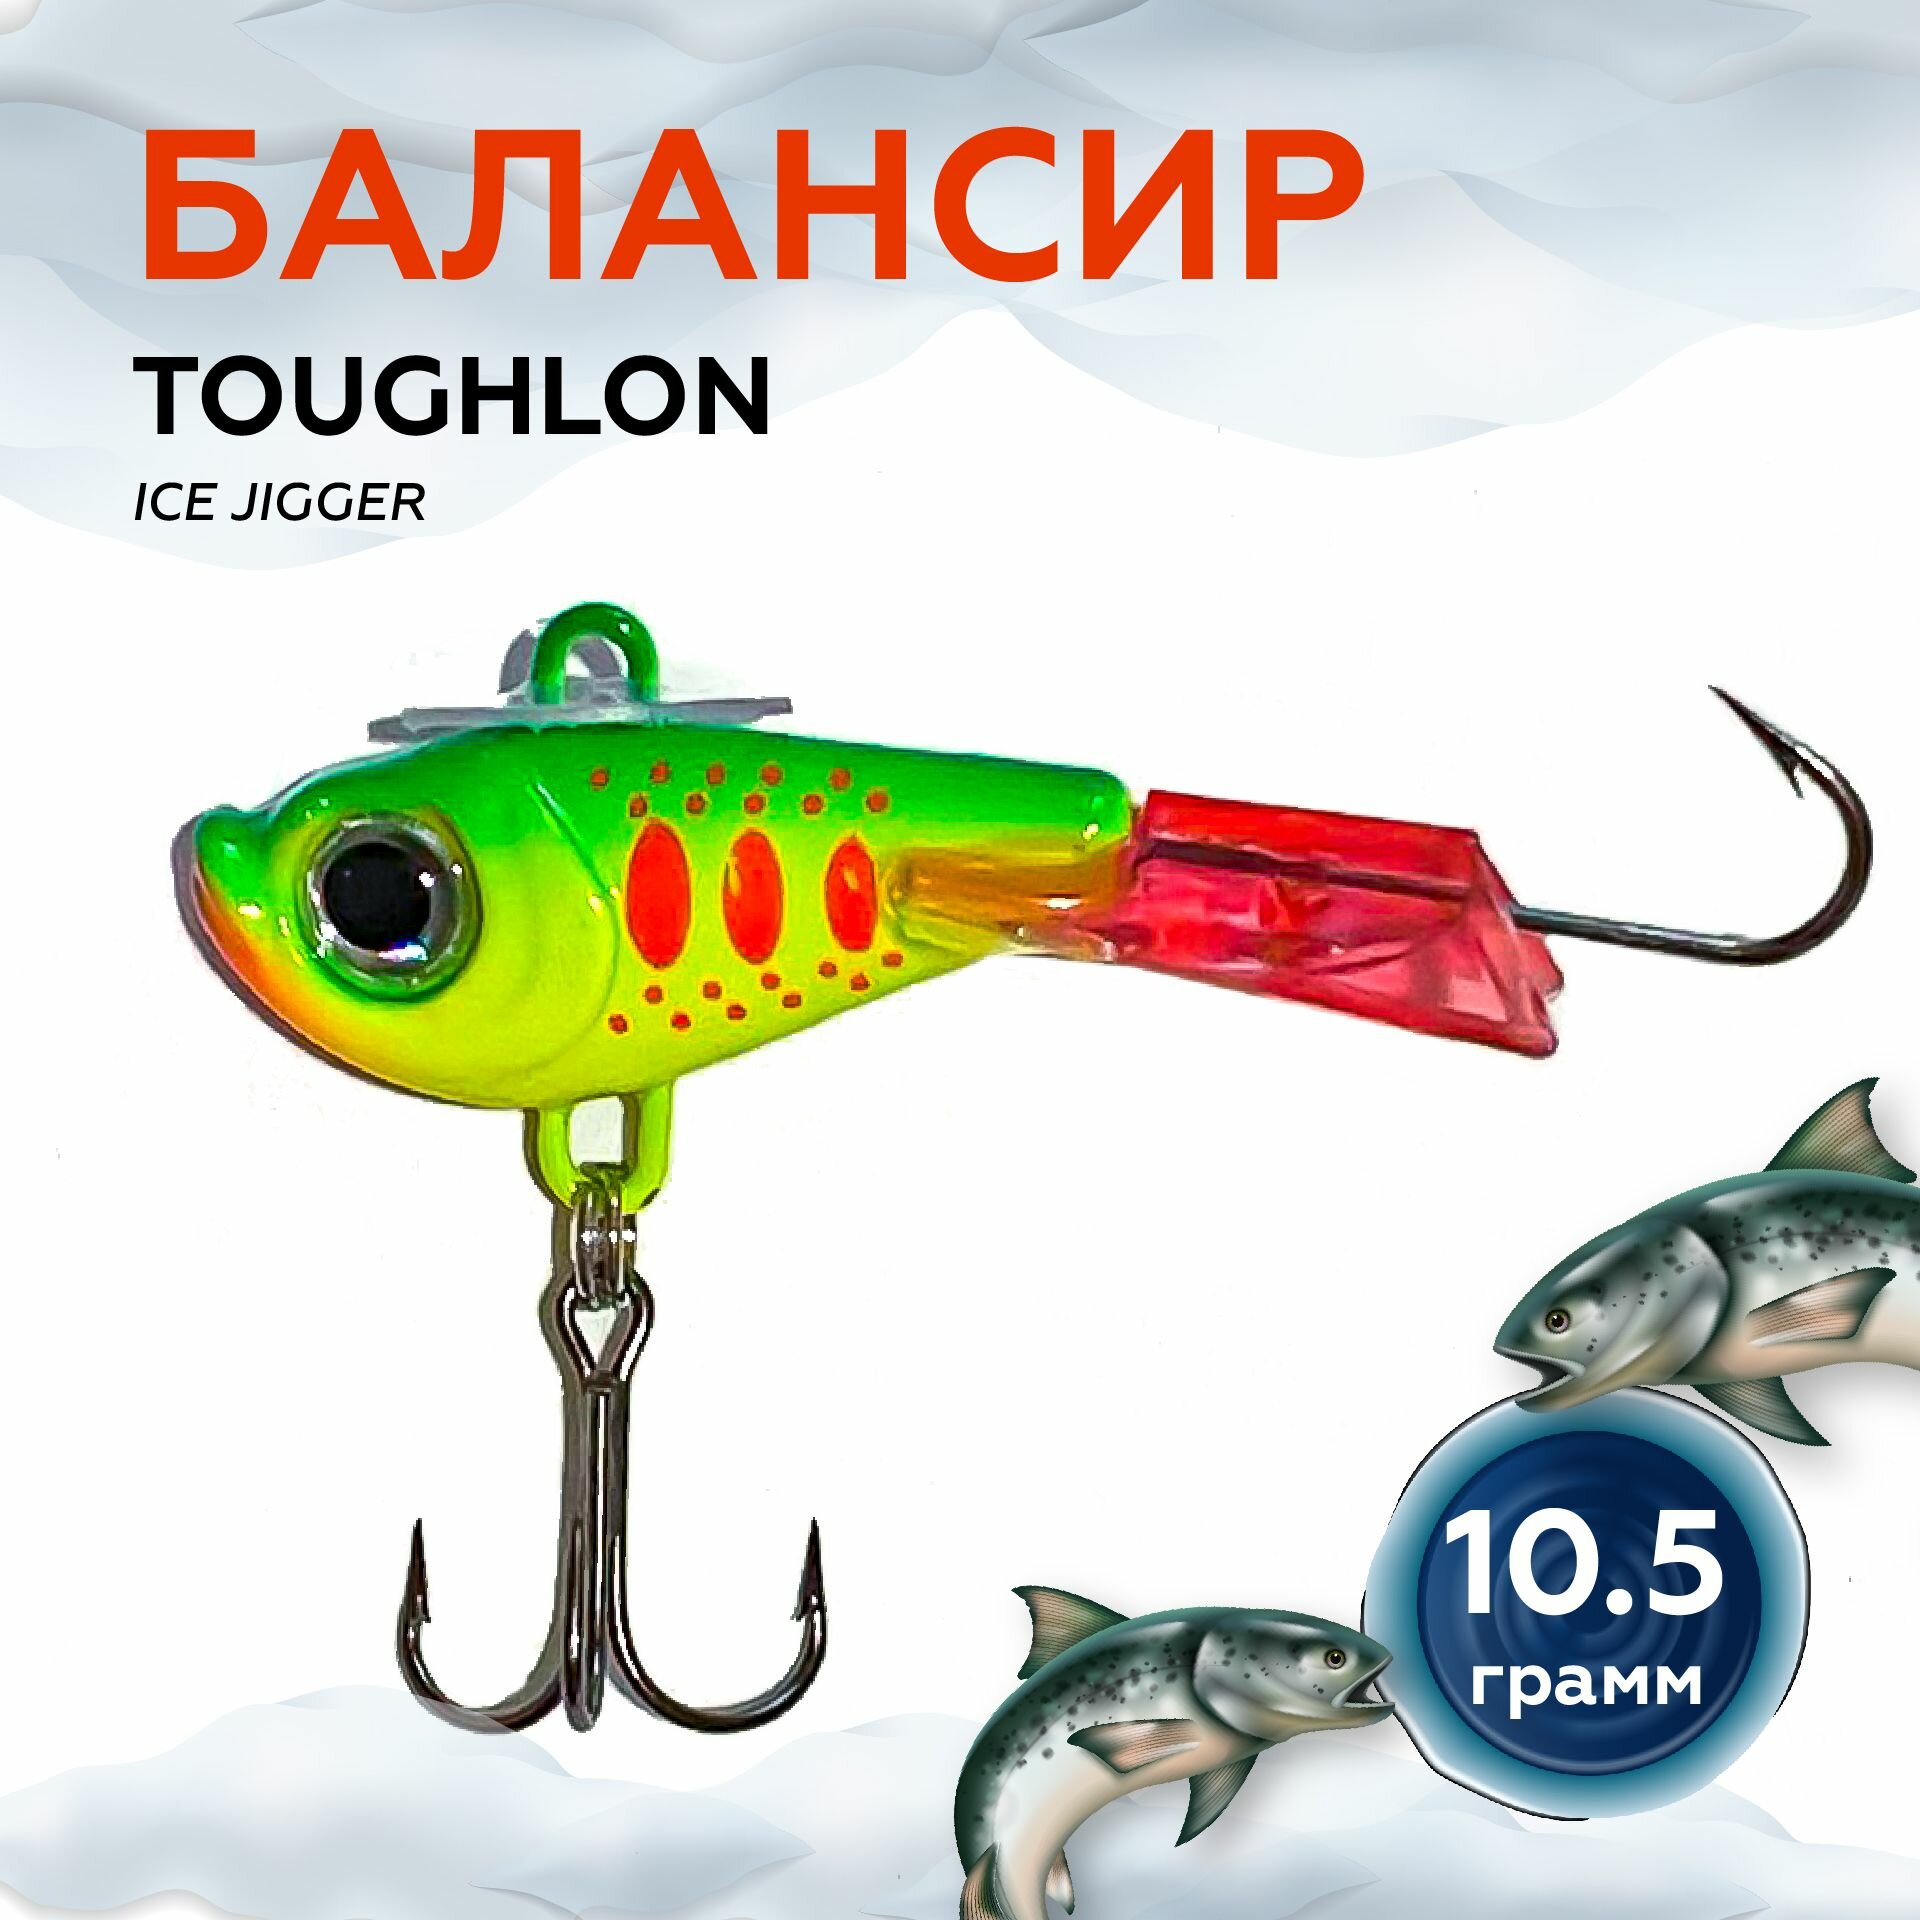 Балансир TOUGHLON ice jigger для зимней рыбалки. Балансир 48 мм, 10.5 грамм